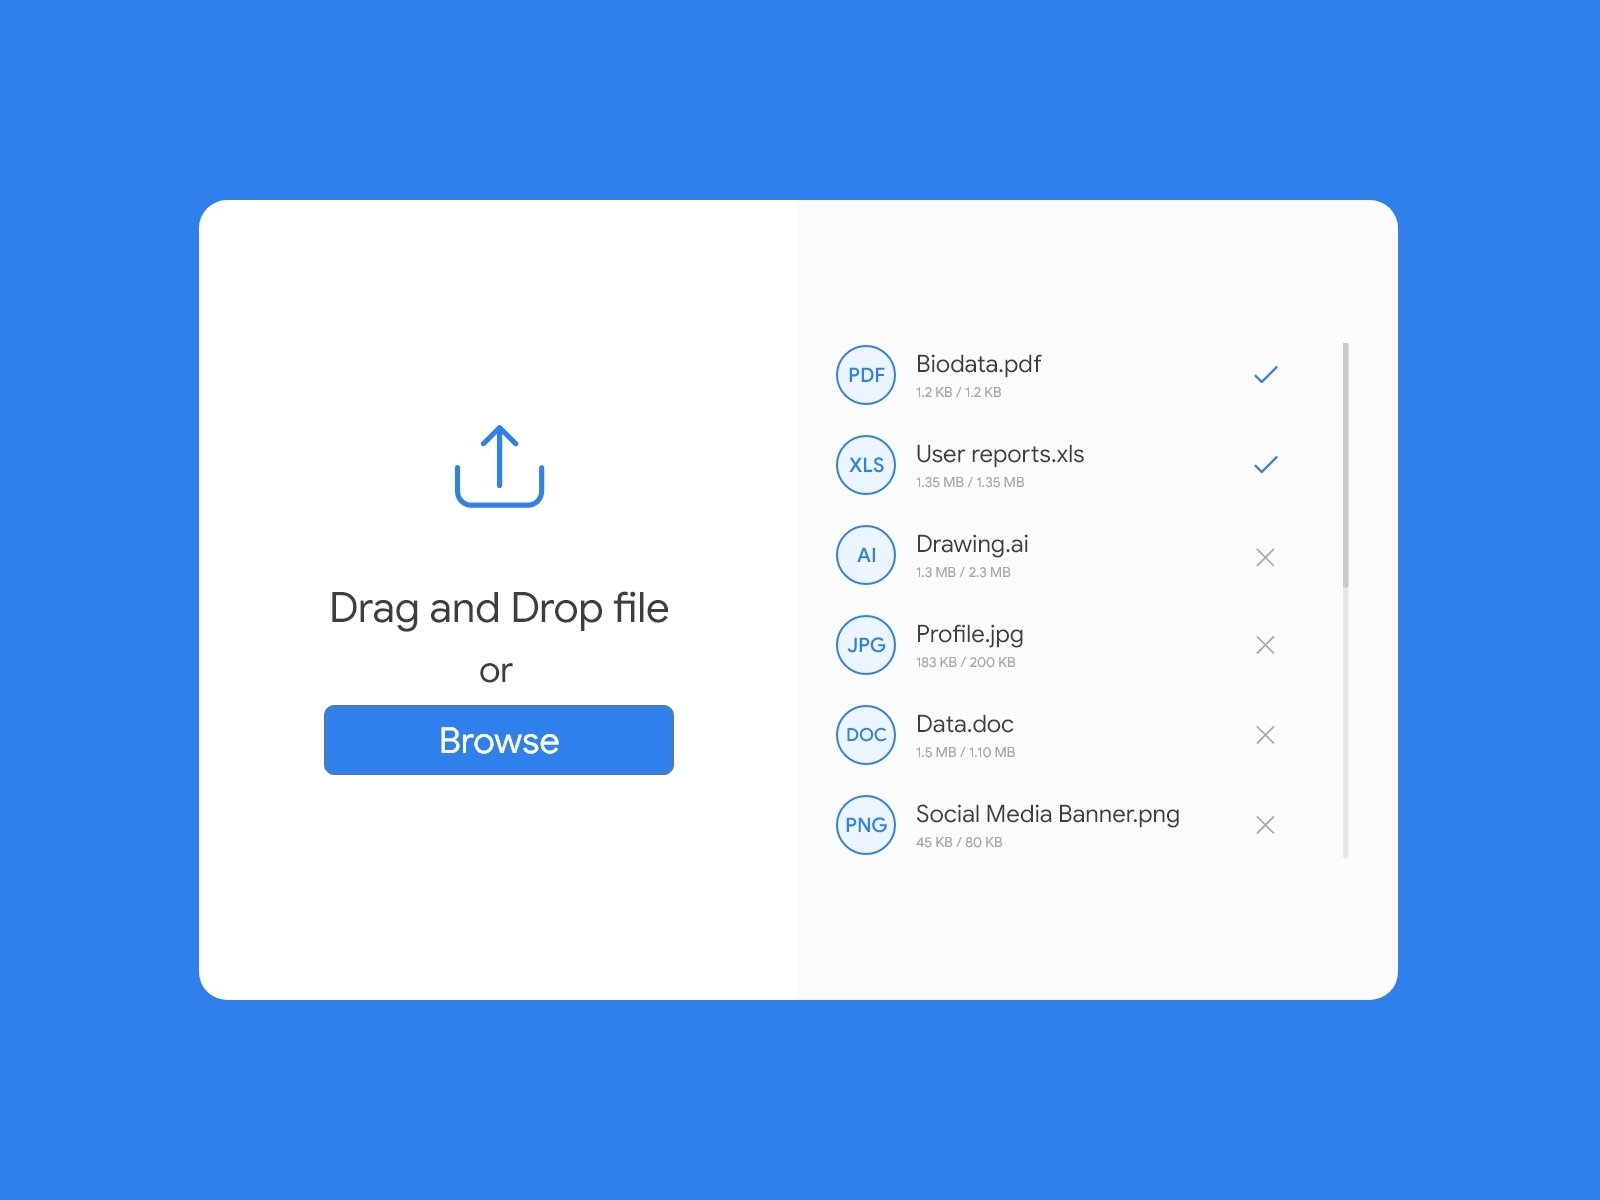 Document, file, upload icon - Download on Iconfinder